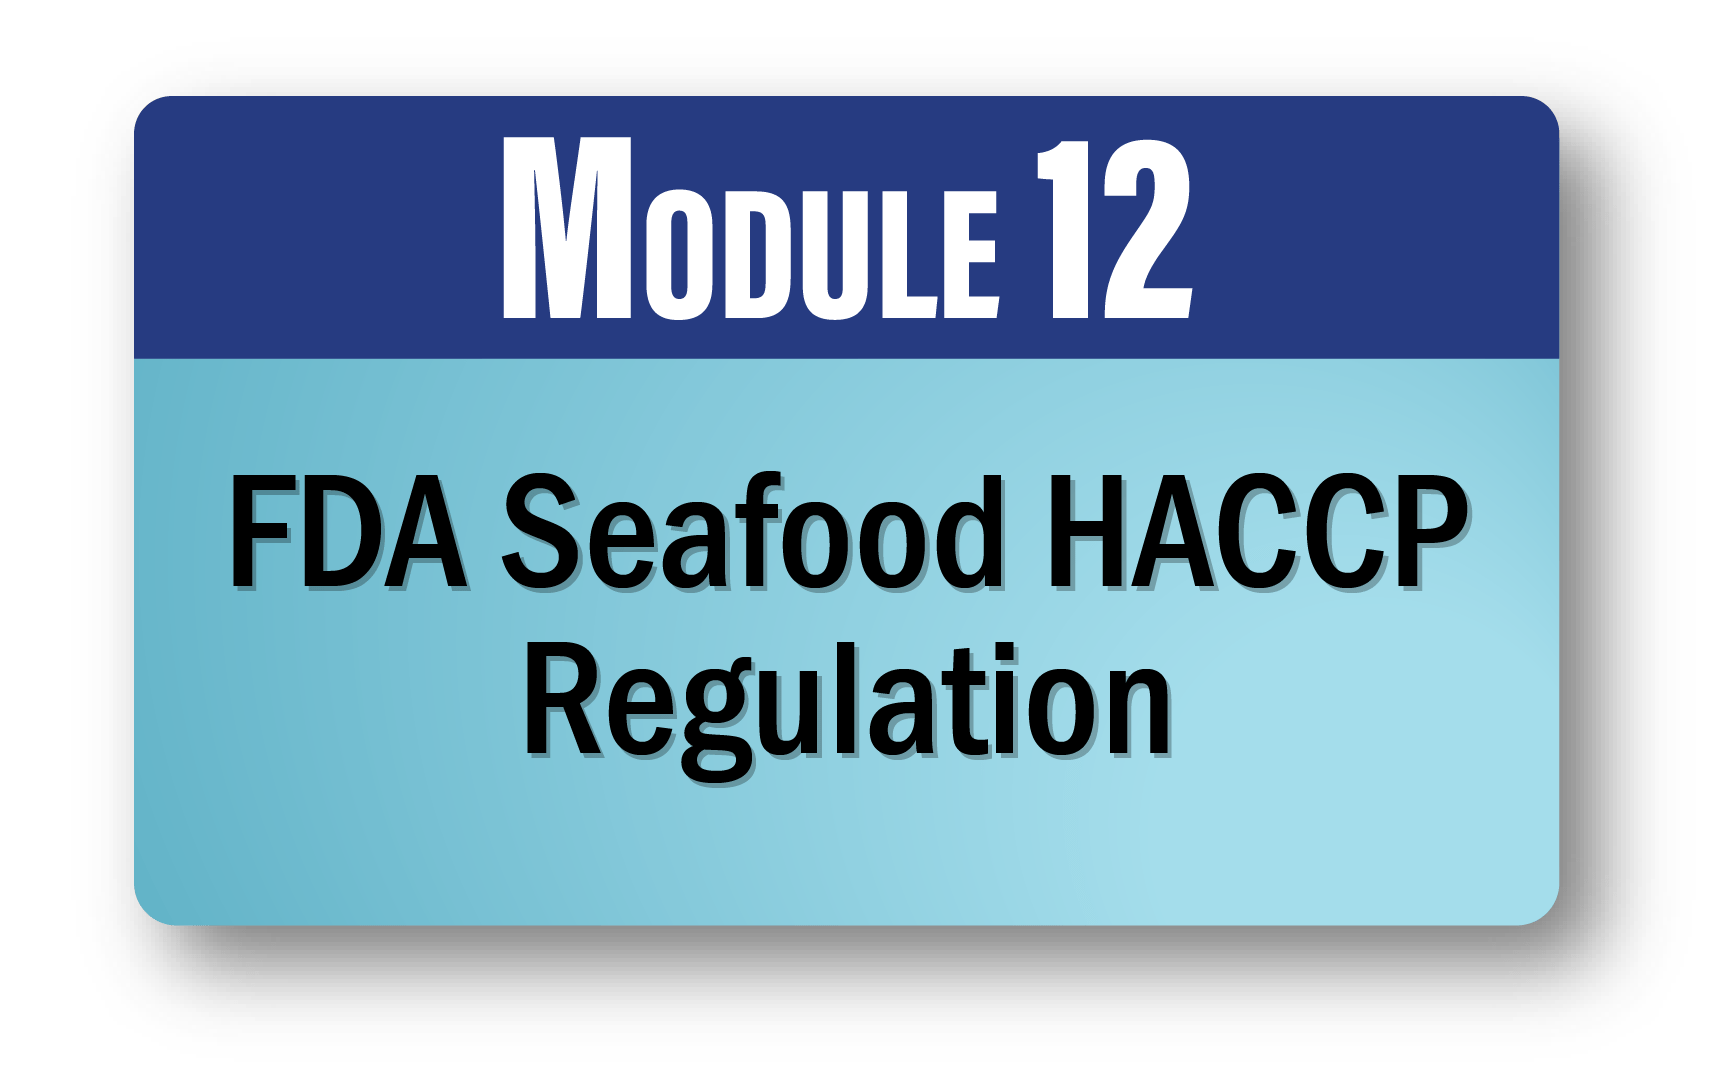 FDA Seafood HACCP Regulation